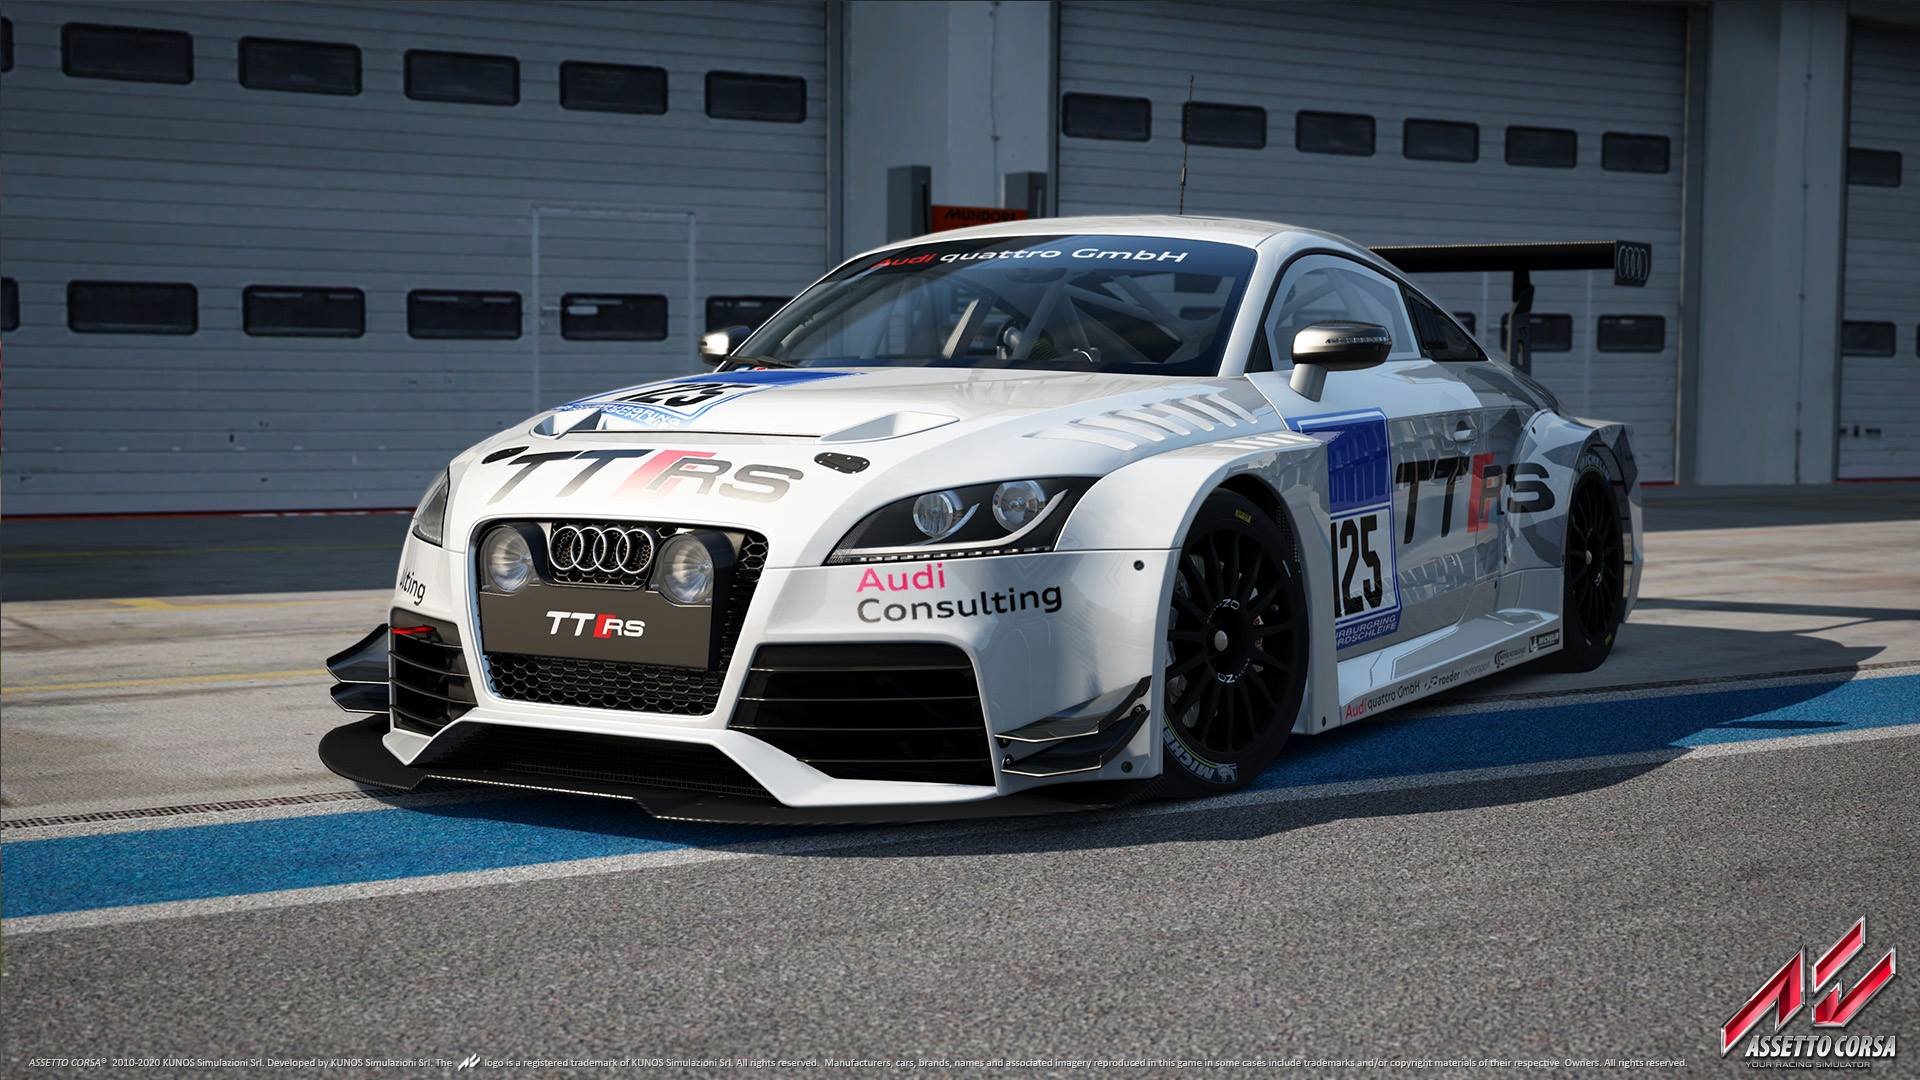 More information about "Assetto Corsa: ecco l'Audi TT RS VLN"